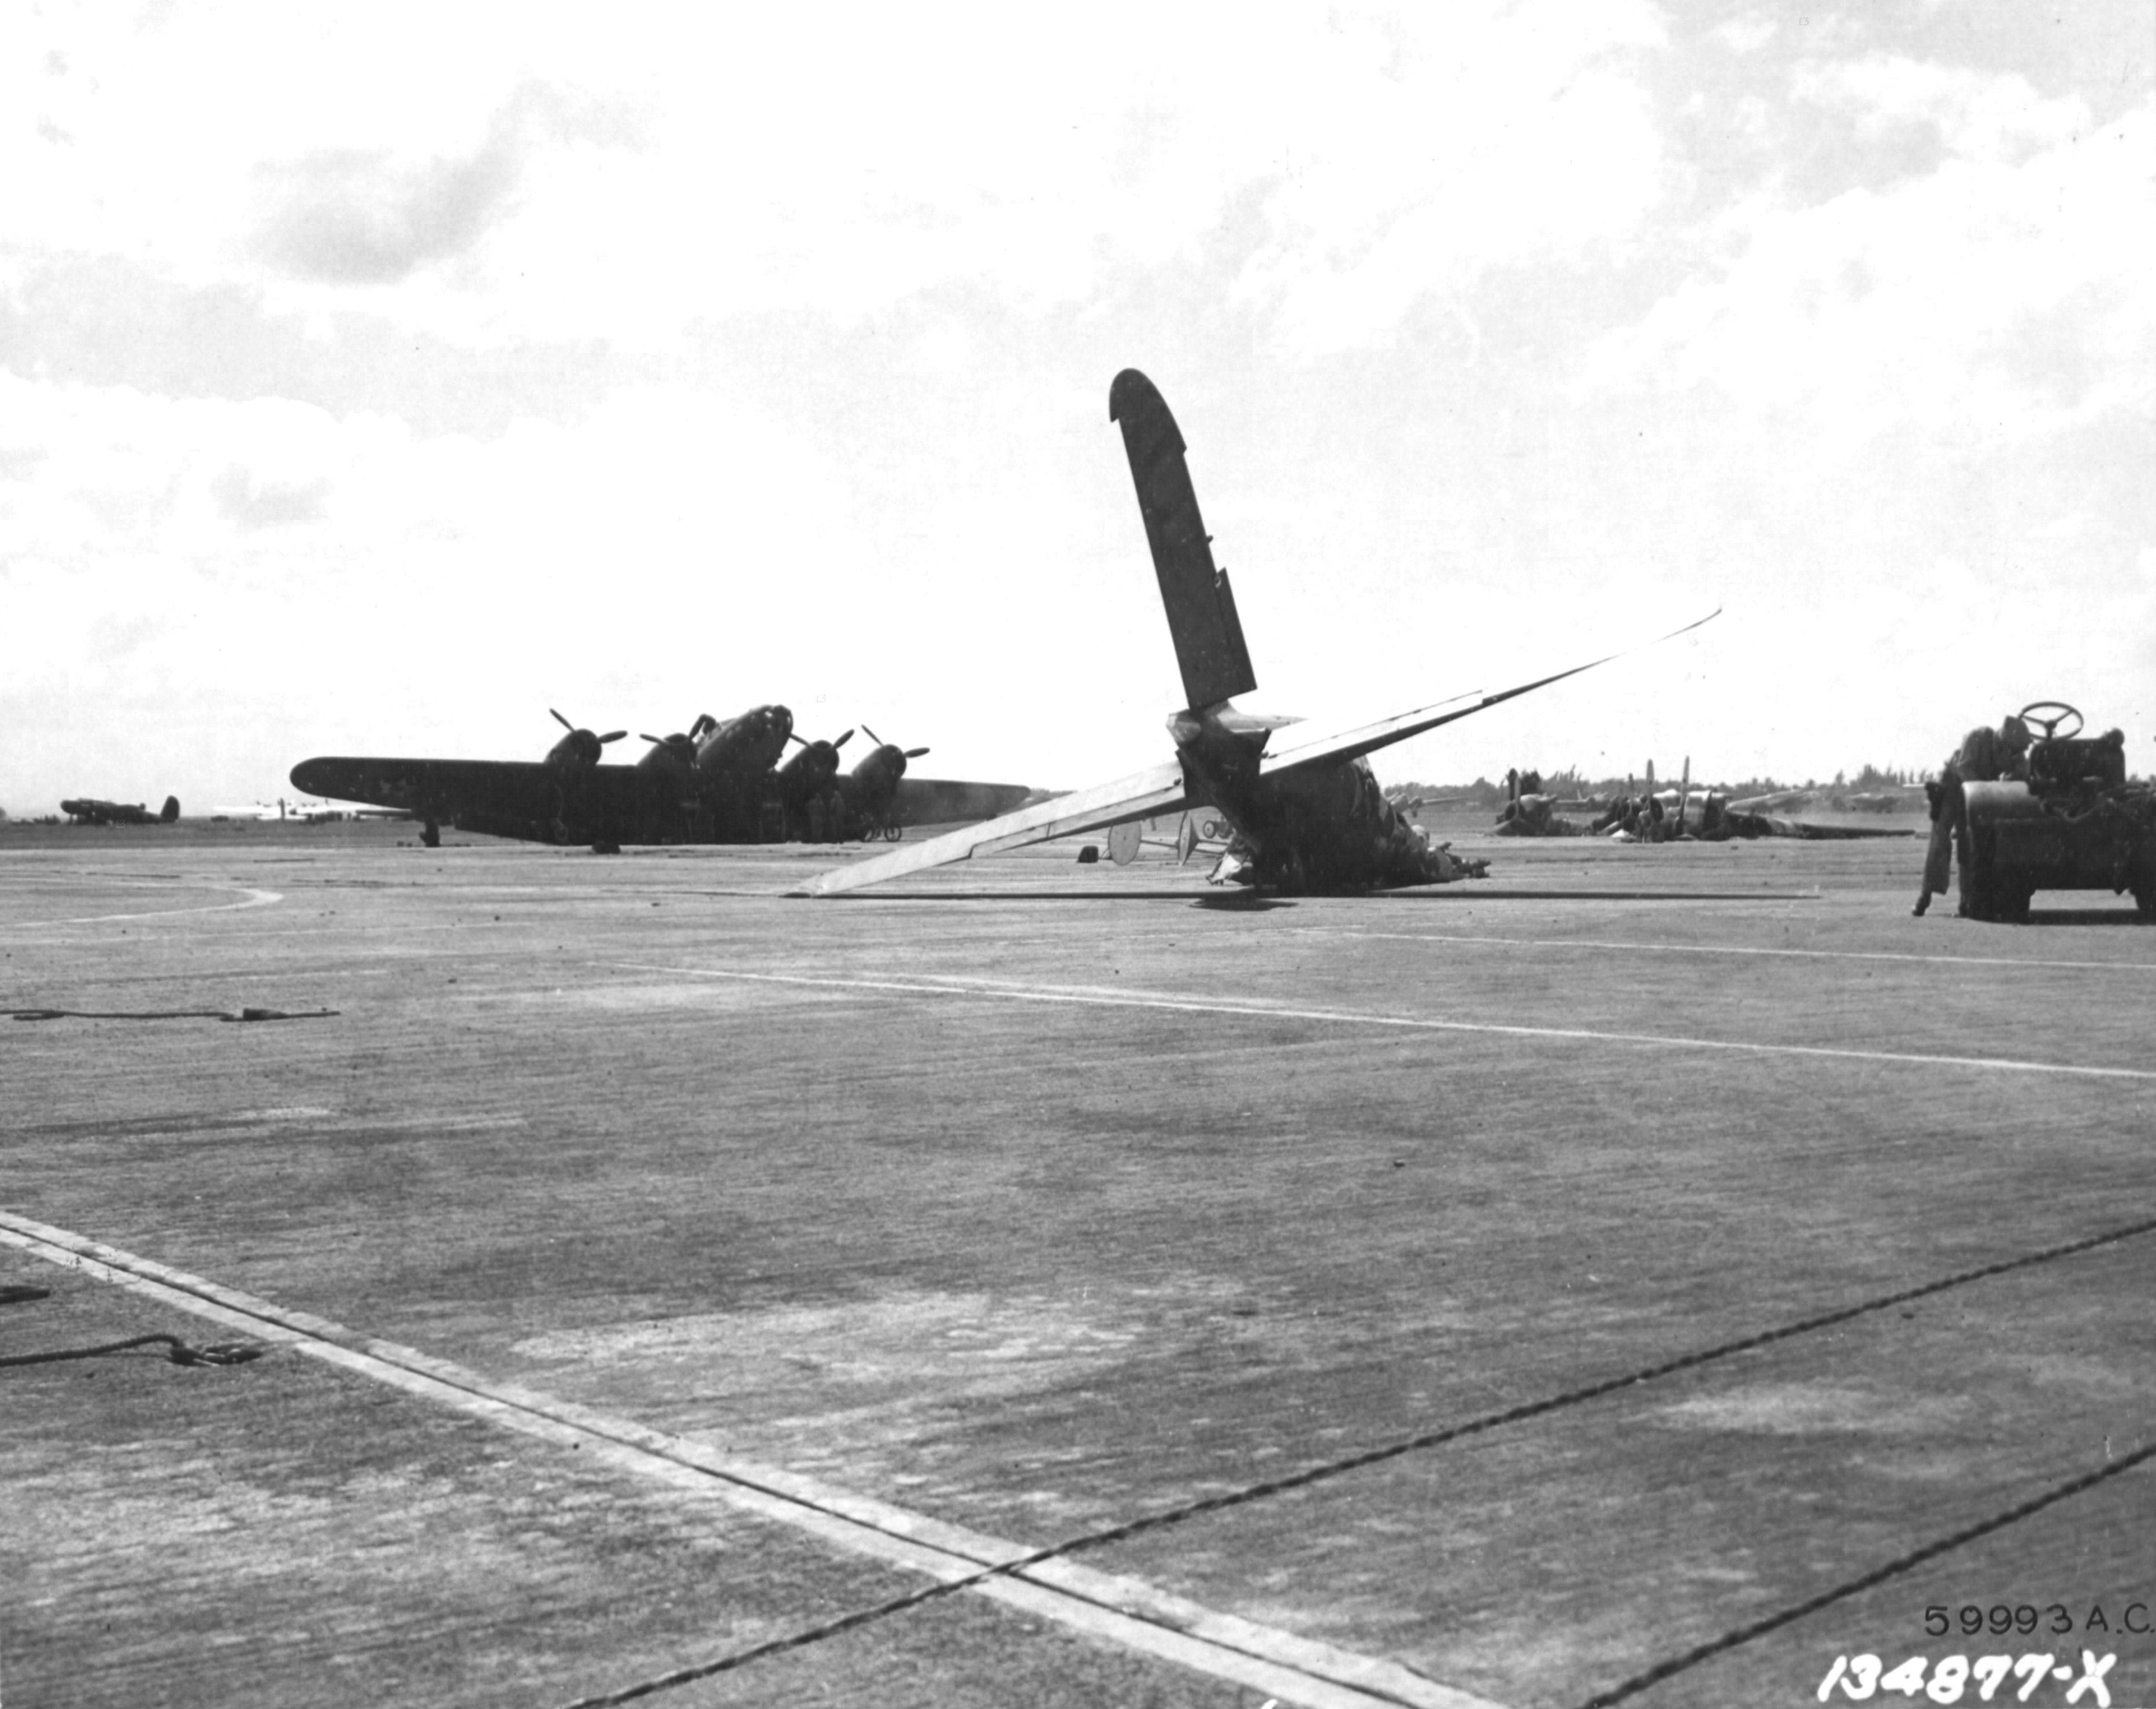 Wreck of B-17C bomber at Hickam Field, US Territory of Hawaii, 7 Dec 1941. Photo 2 of 2.